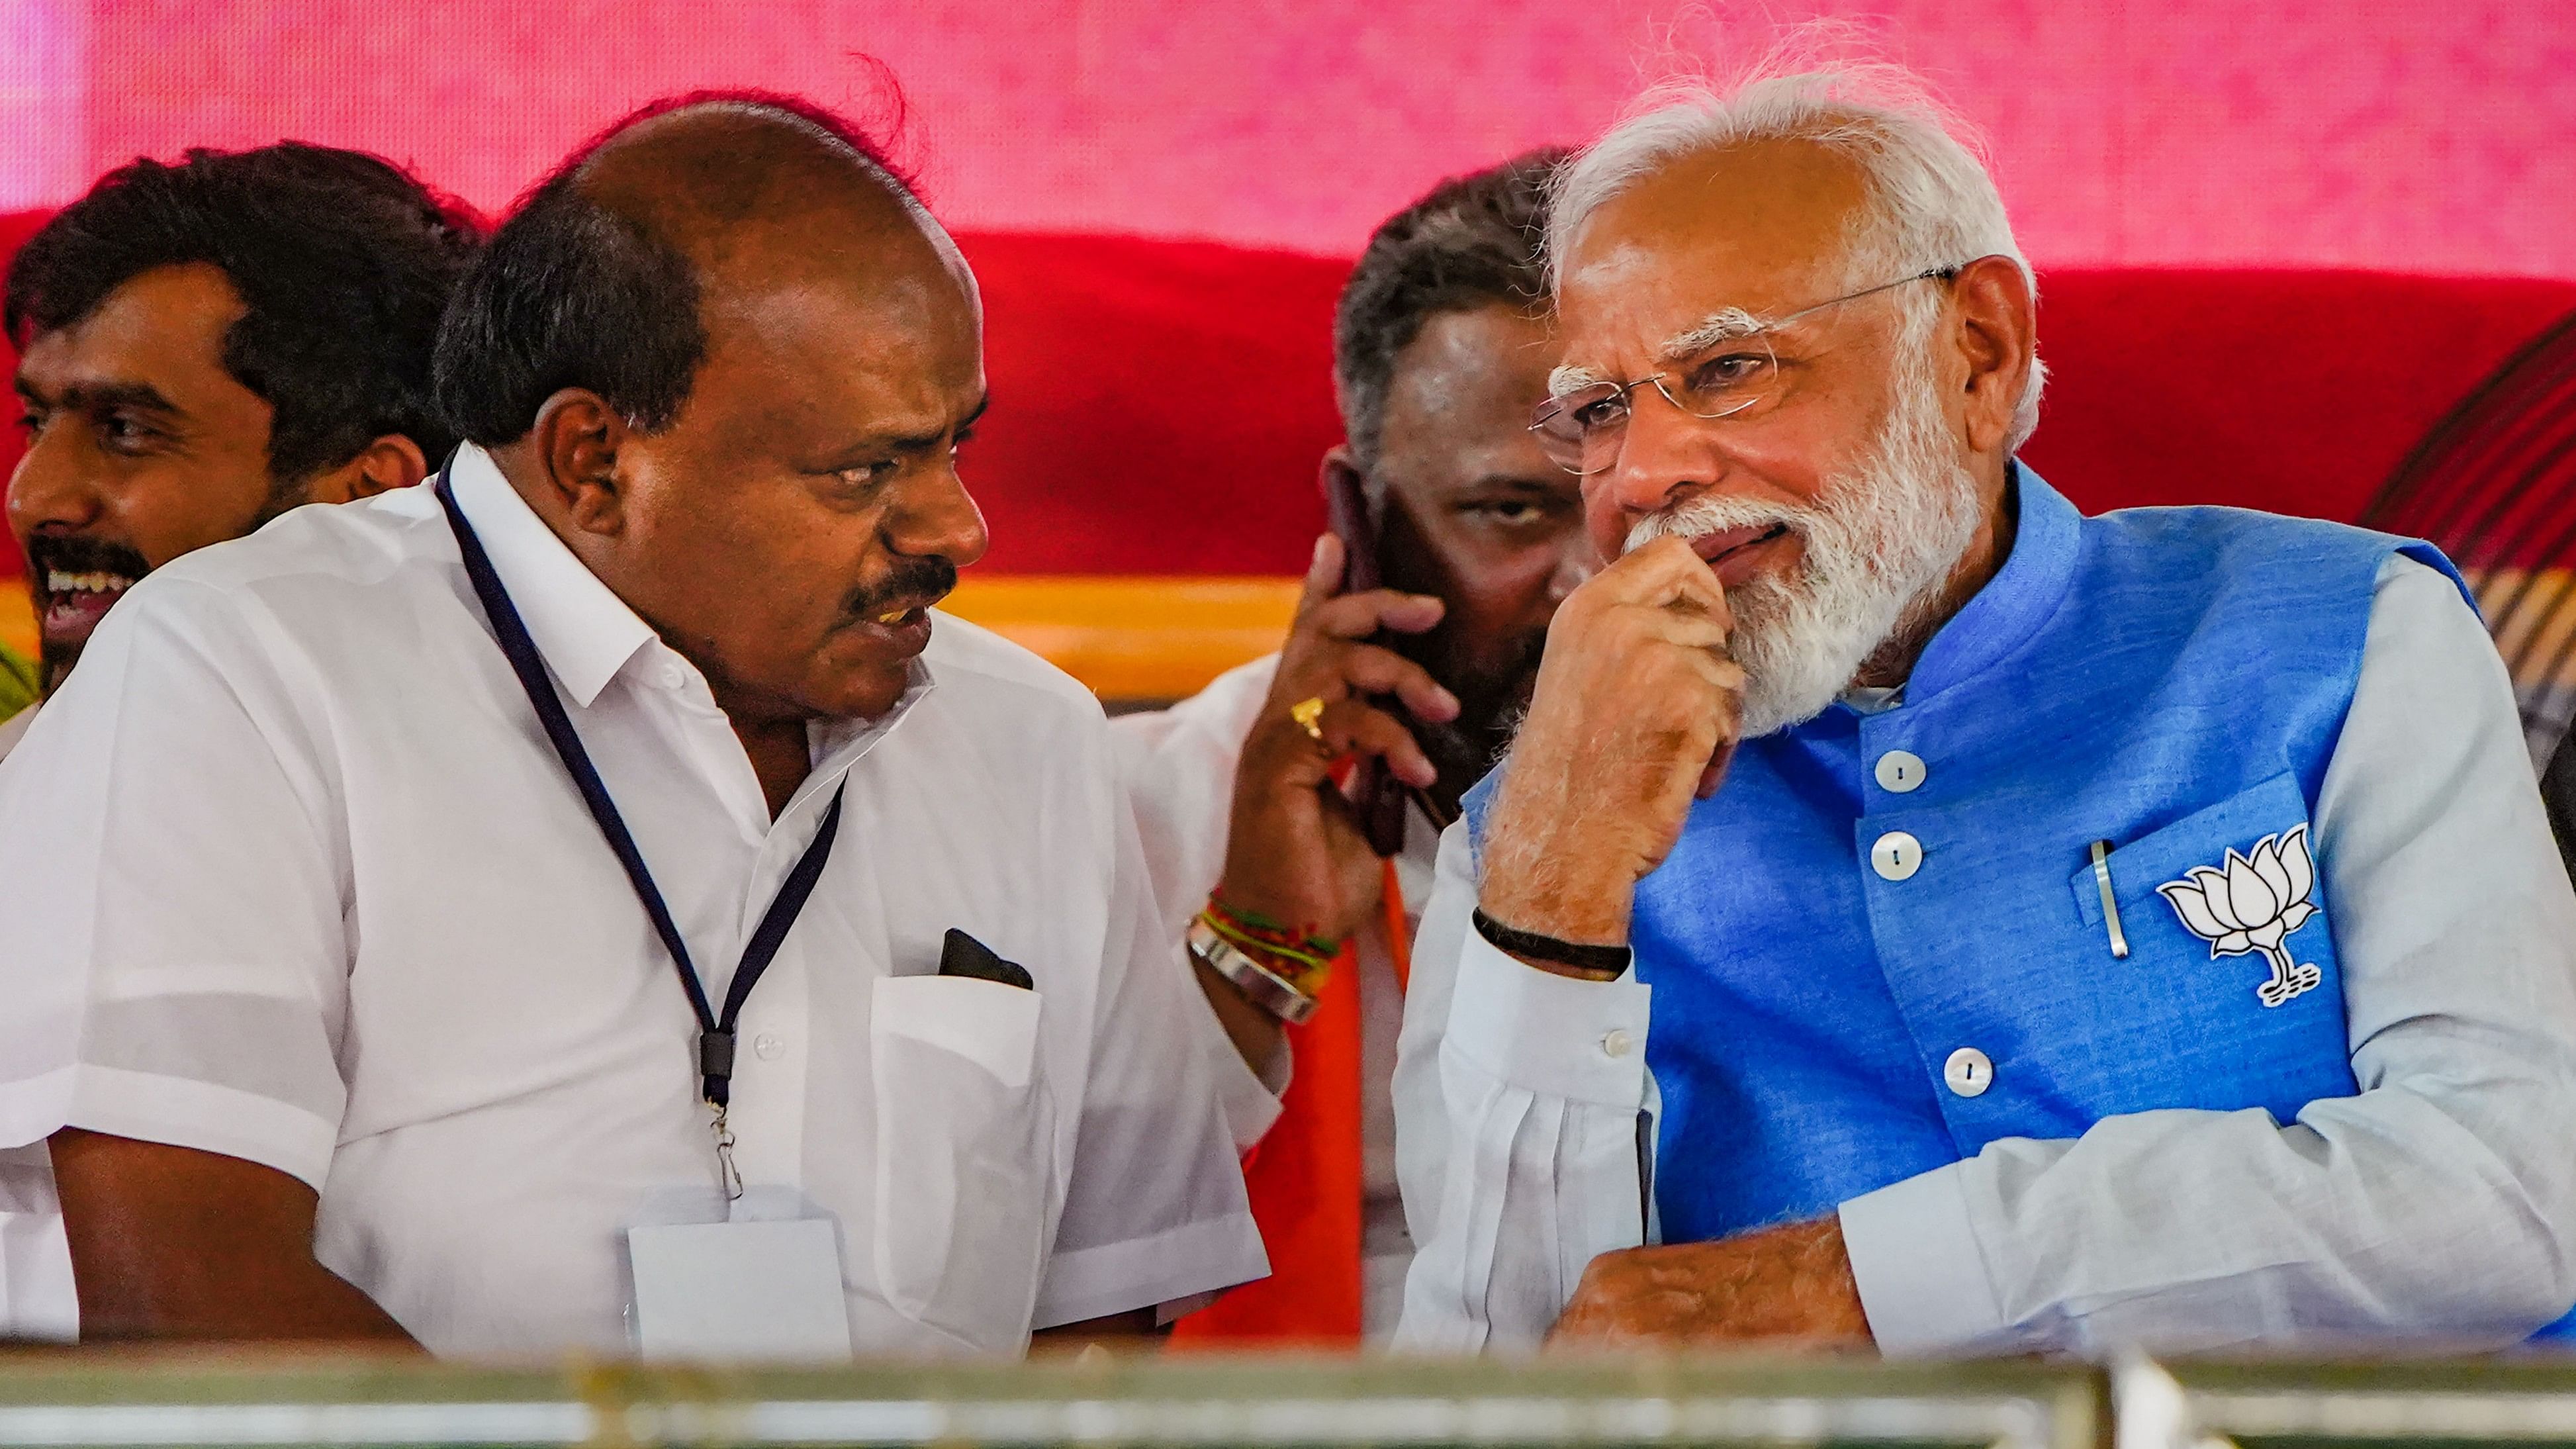 <div class="paragraphs"><p>Prime Minister Narendra Modi with JD(S) leader &amp; Mandya NDA candidate H D Kumaraswamy at an election campaign rally ahead of Lok Sabha election, in Mysuru.</p></div>